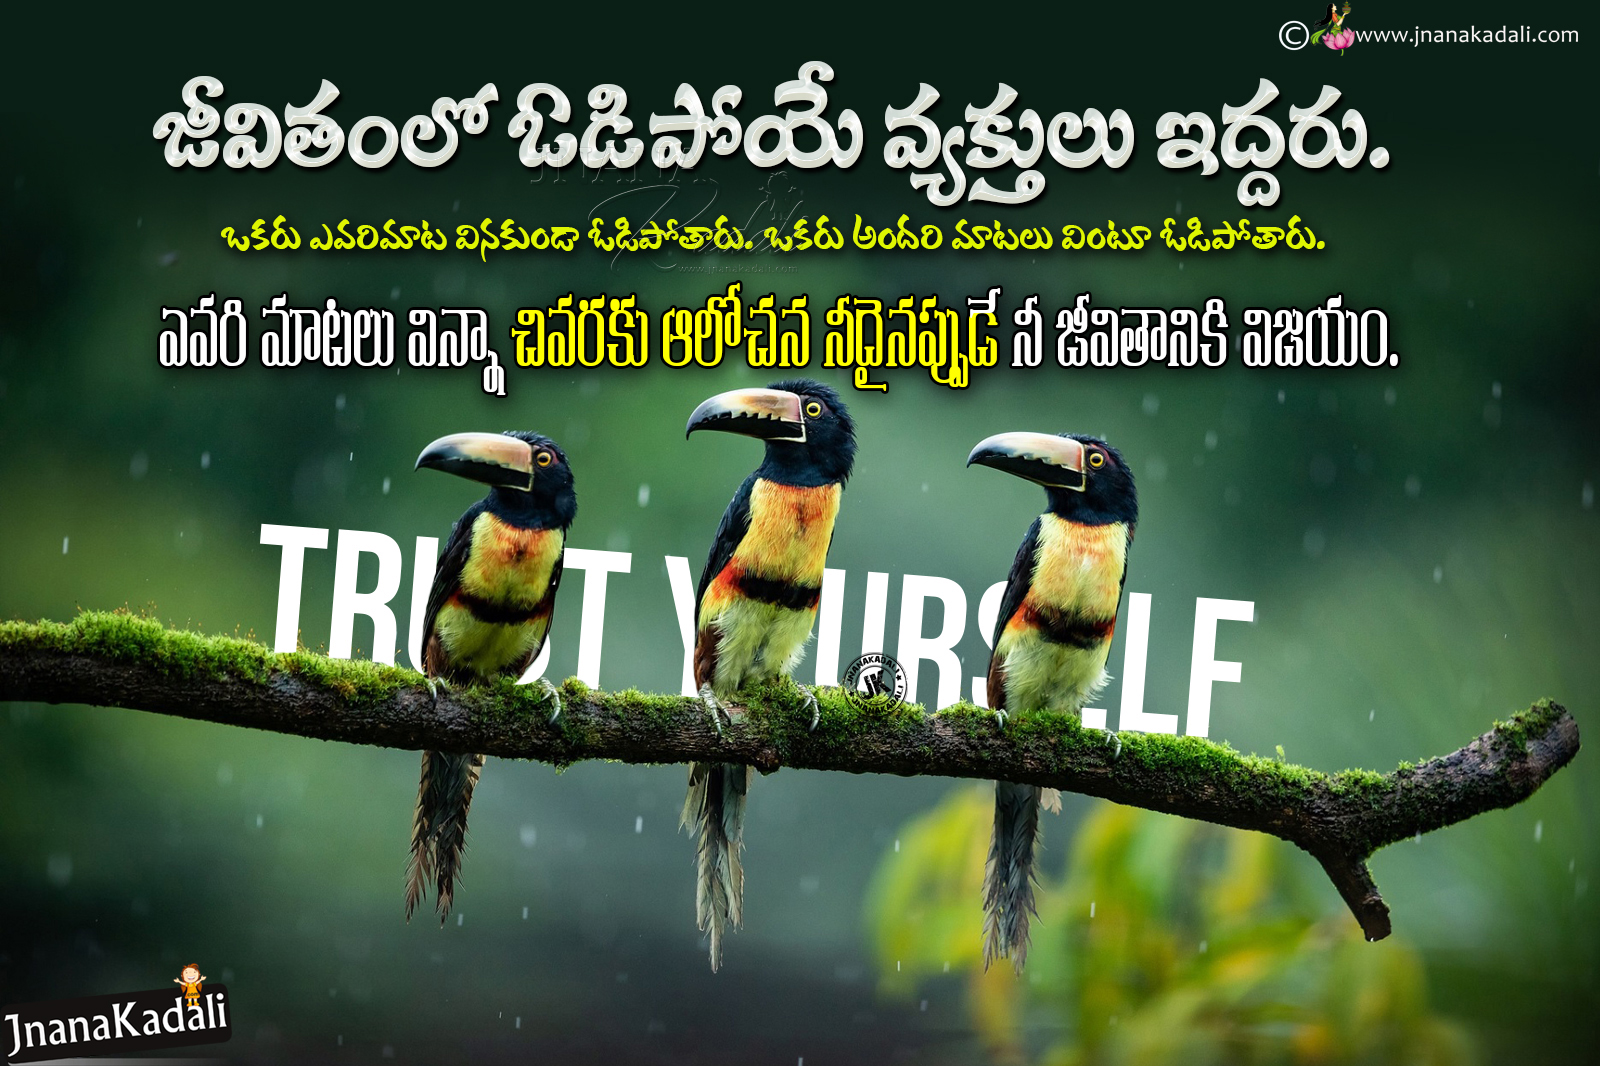 Top Telugu Inspirational Quote On successful life-Daily Telugu ...